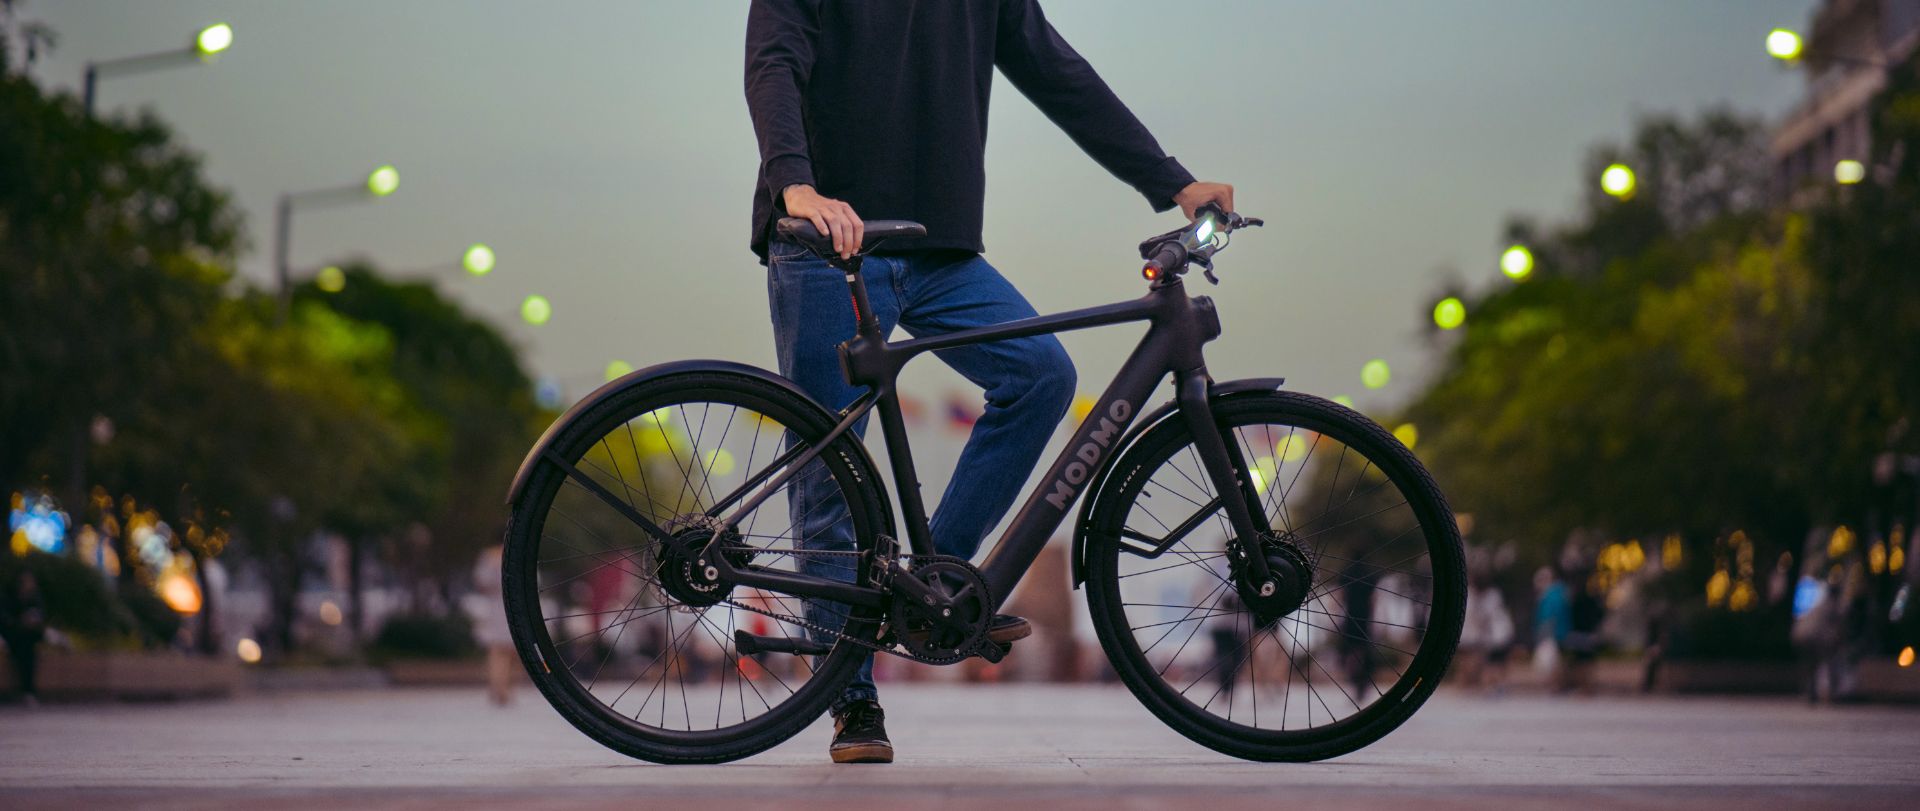 Modmo Saigon+ Electric Bicycle - RRP £2800 - Size S (Rider: 140-155cm) - Image 14 of 19